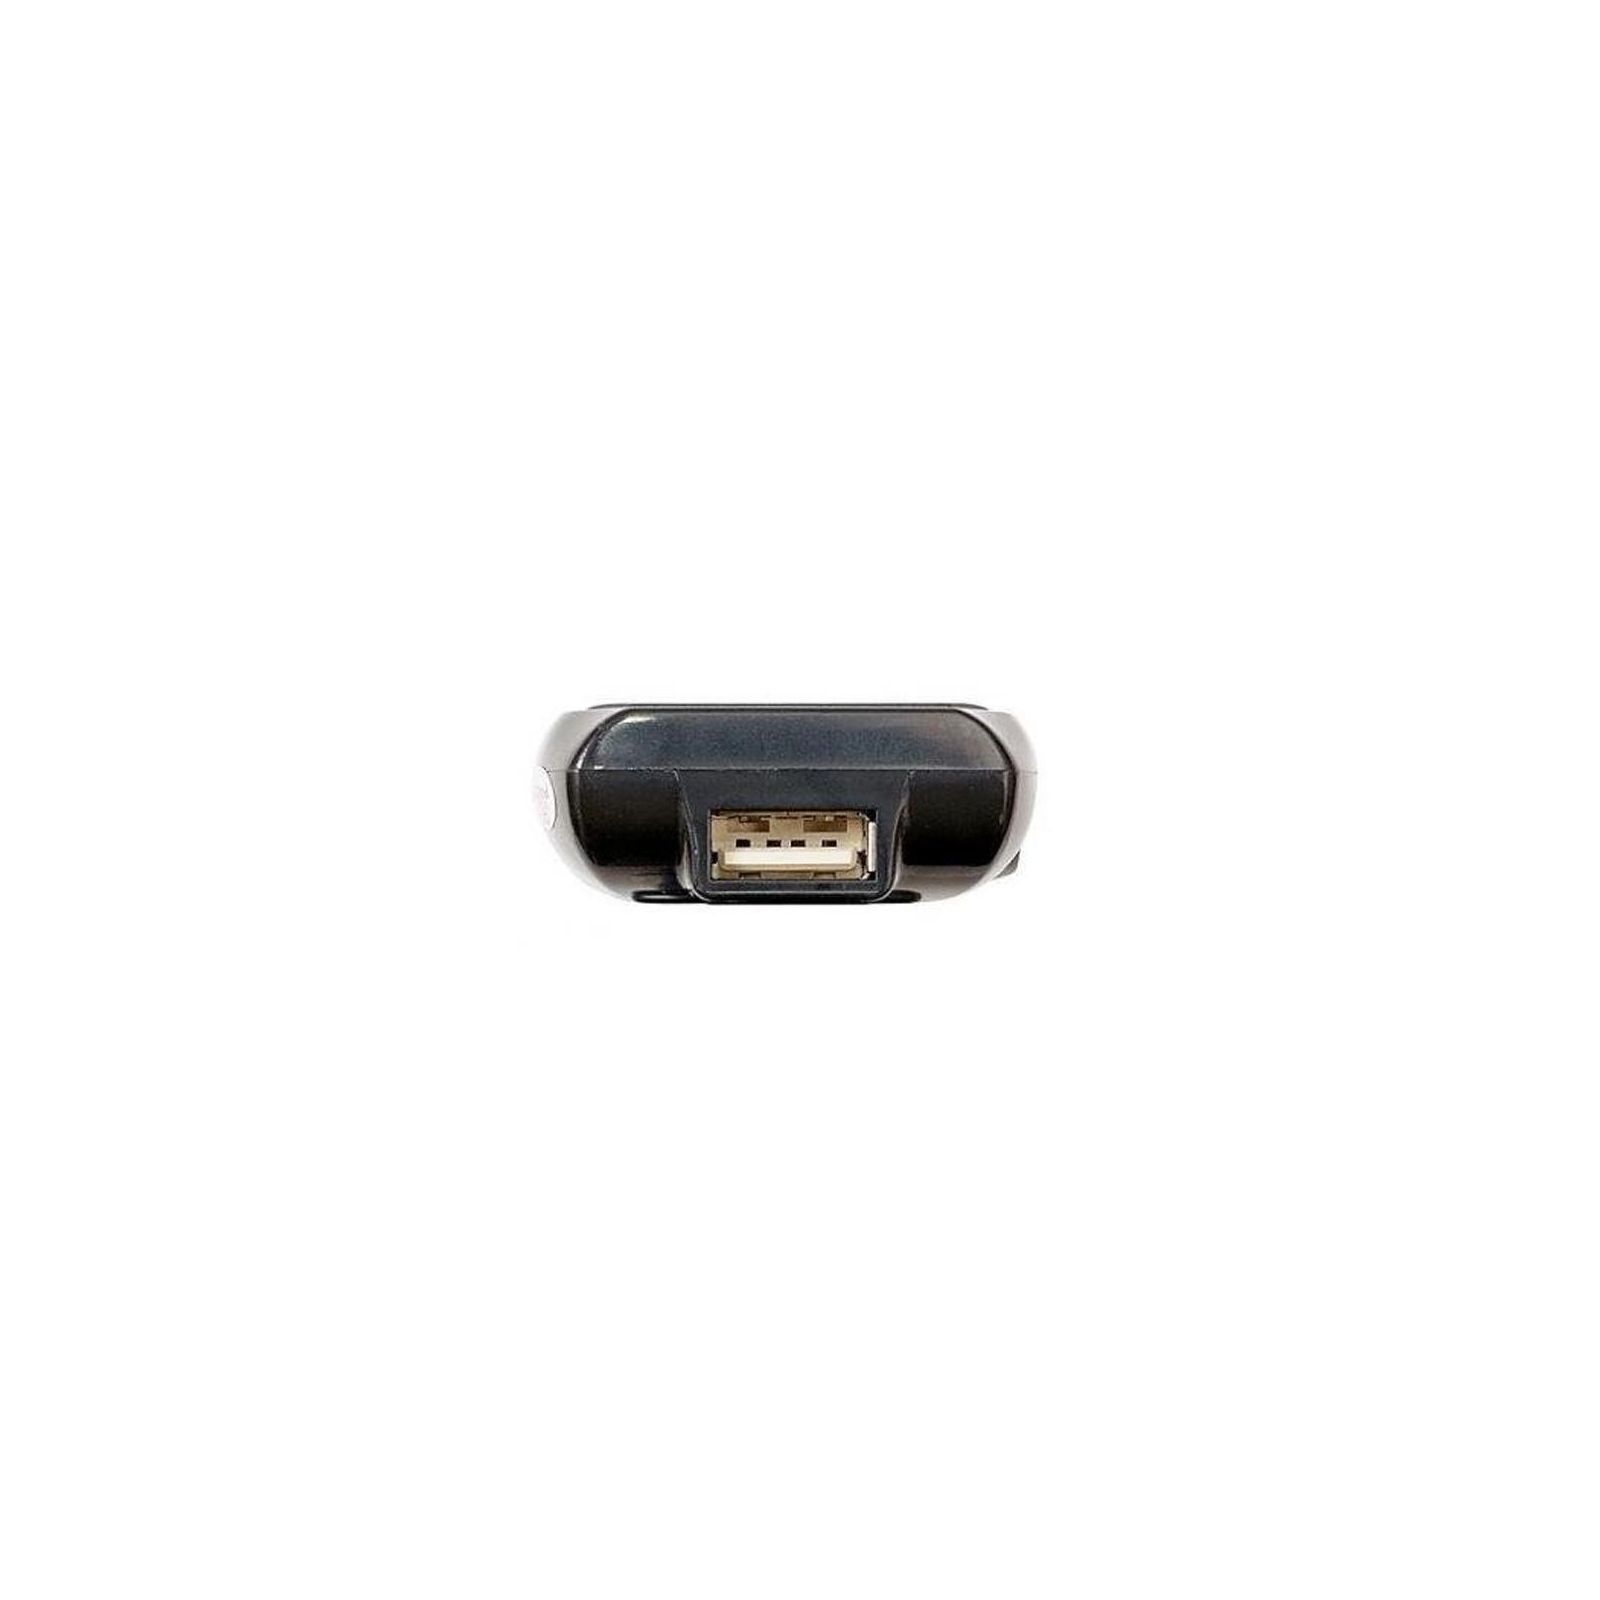 FM модулятор Grand-X CUFM71GRX black SD/USB (CUFM71GRX) изображение 3